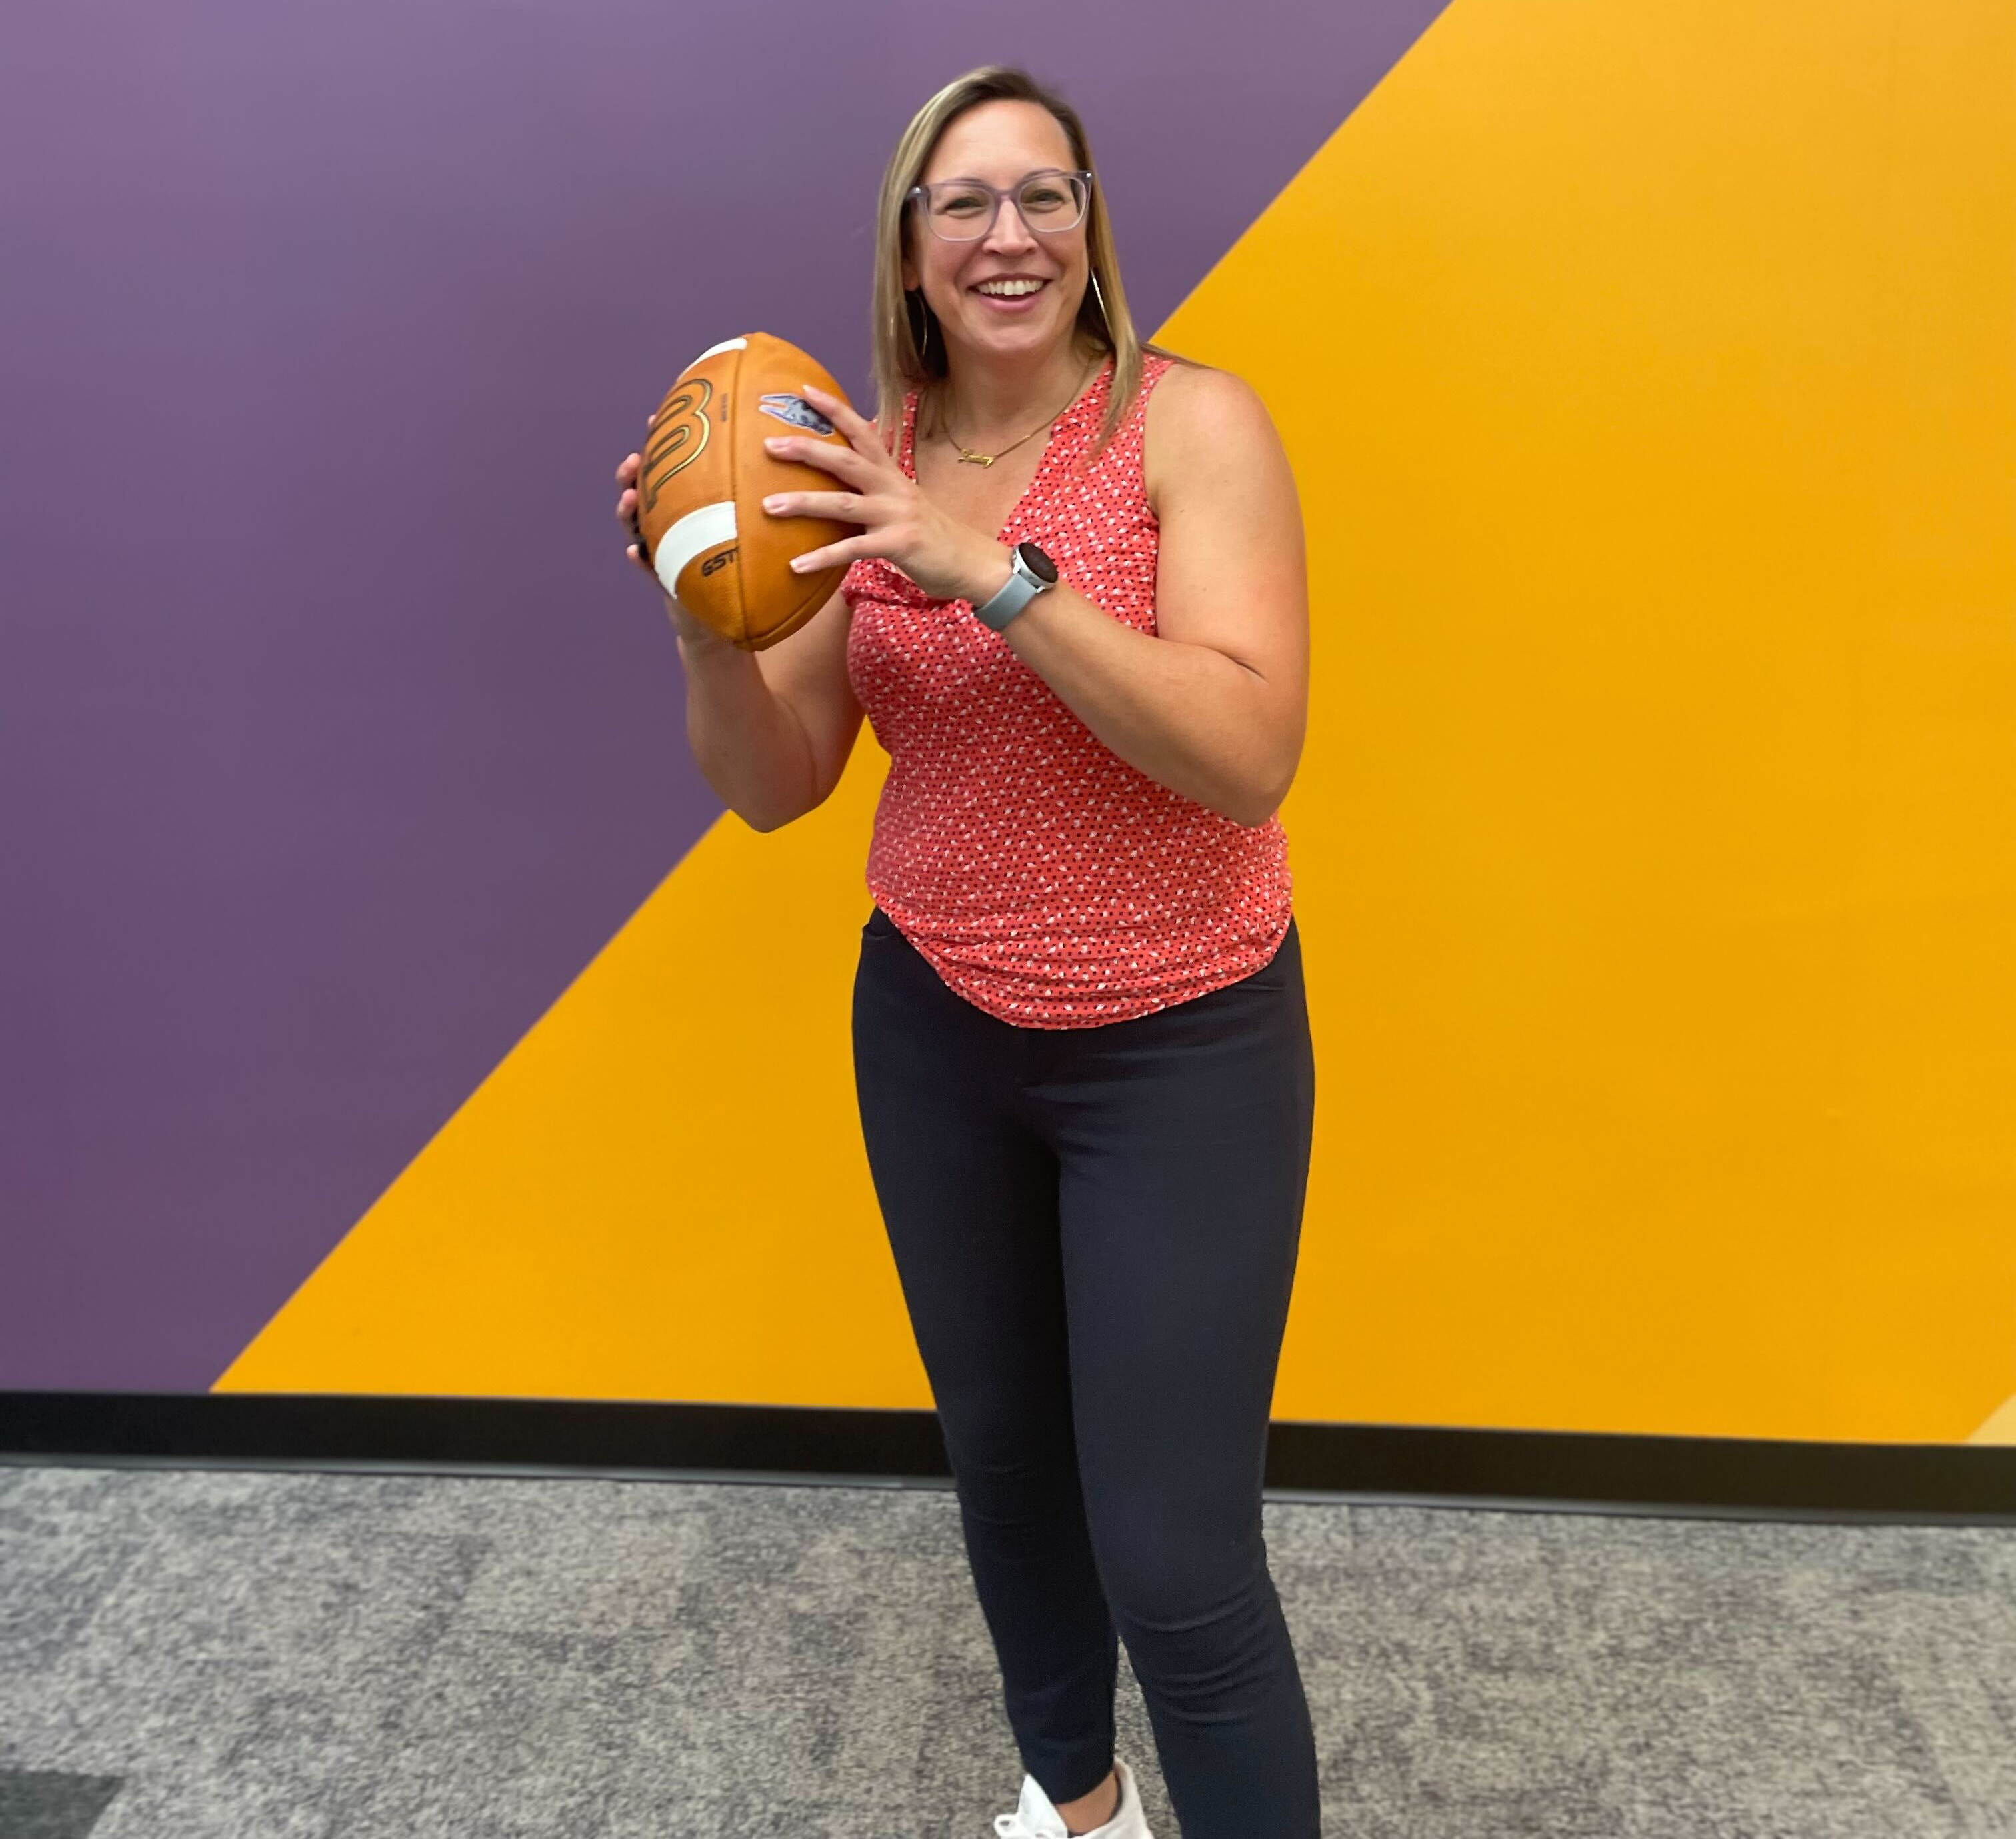 Lindsay Van Berkom with a football